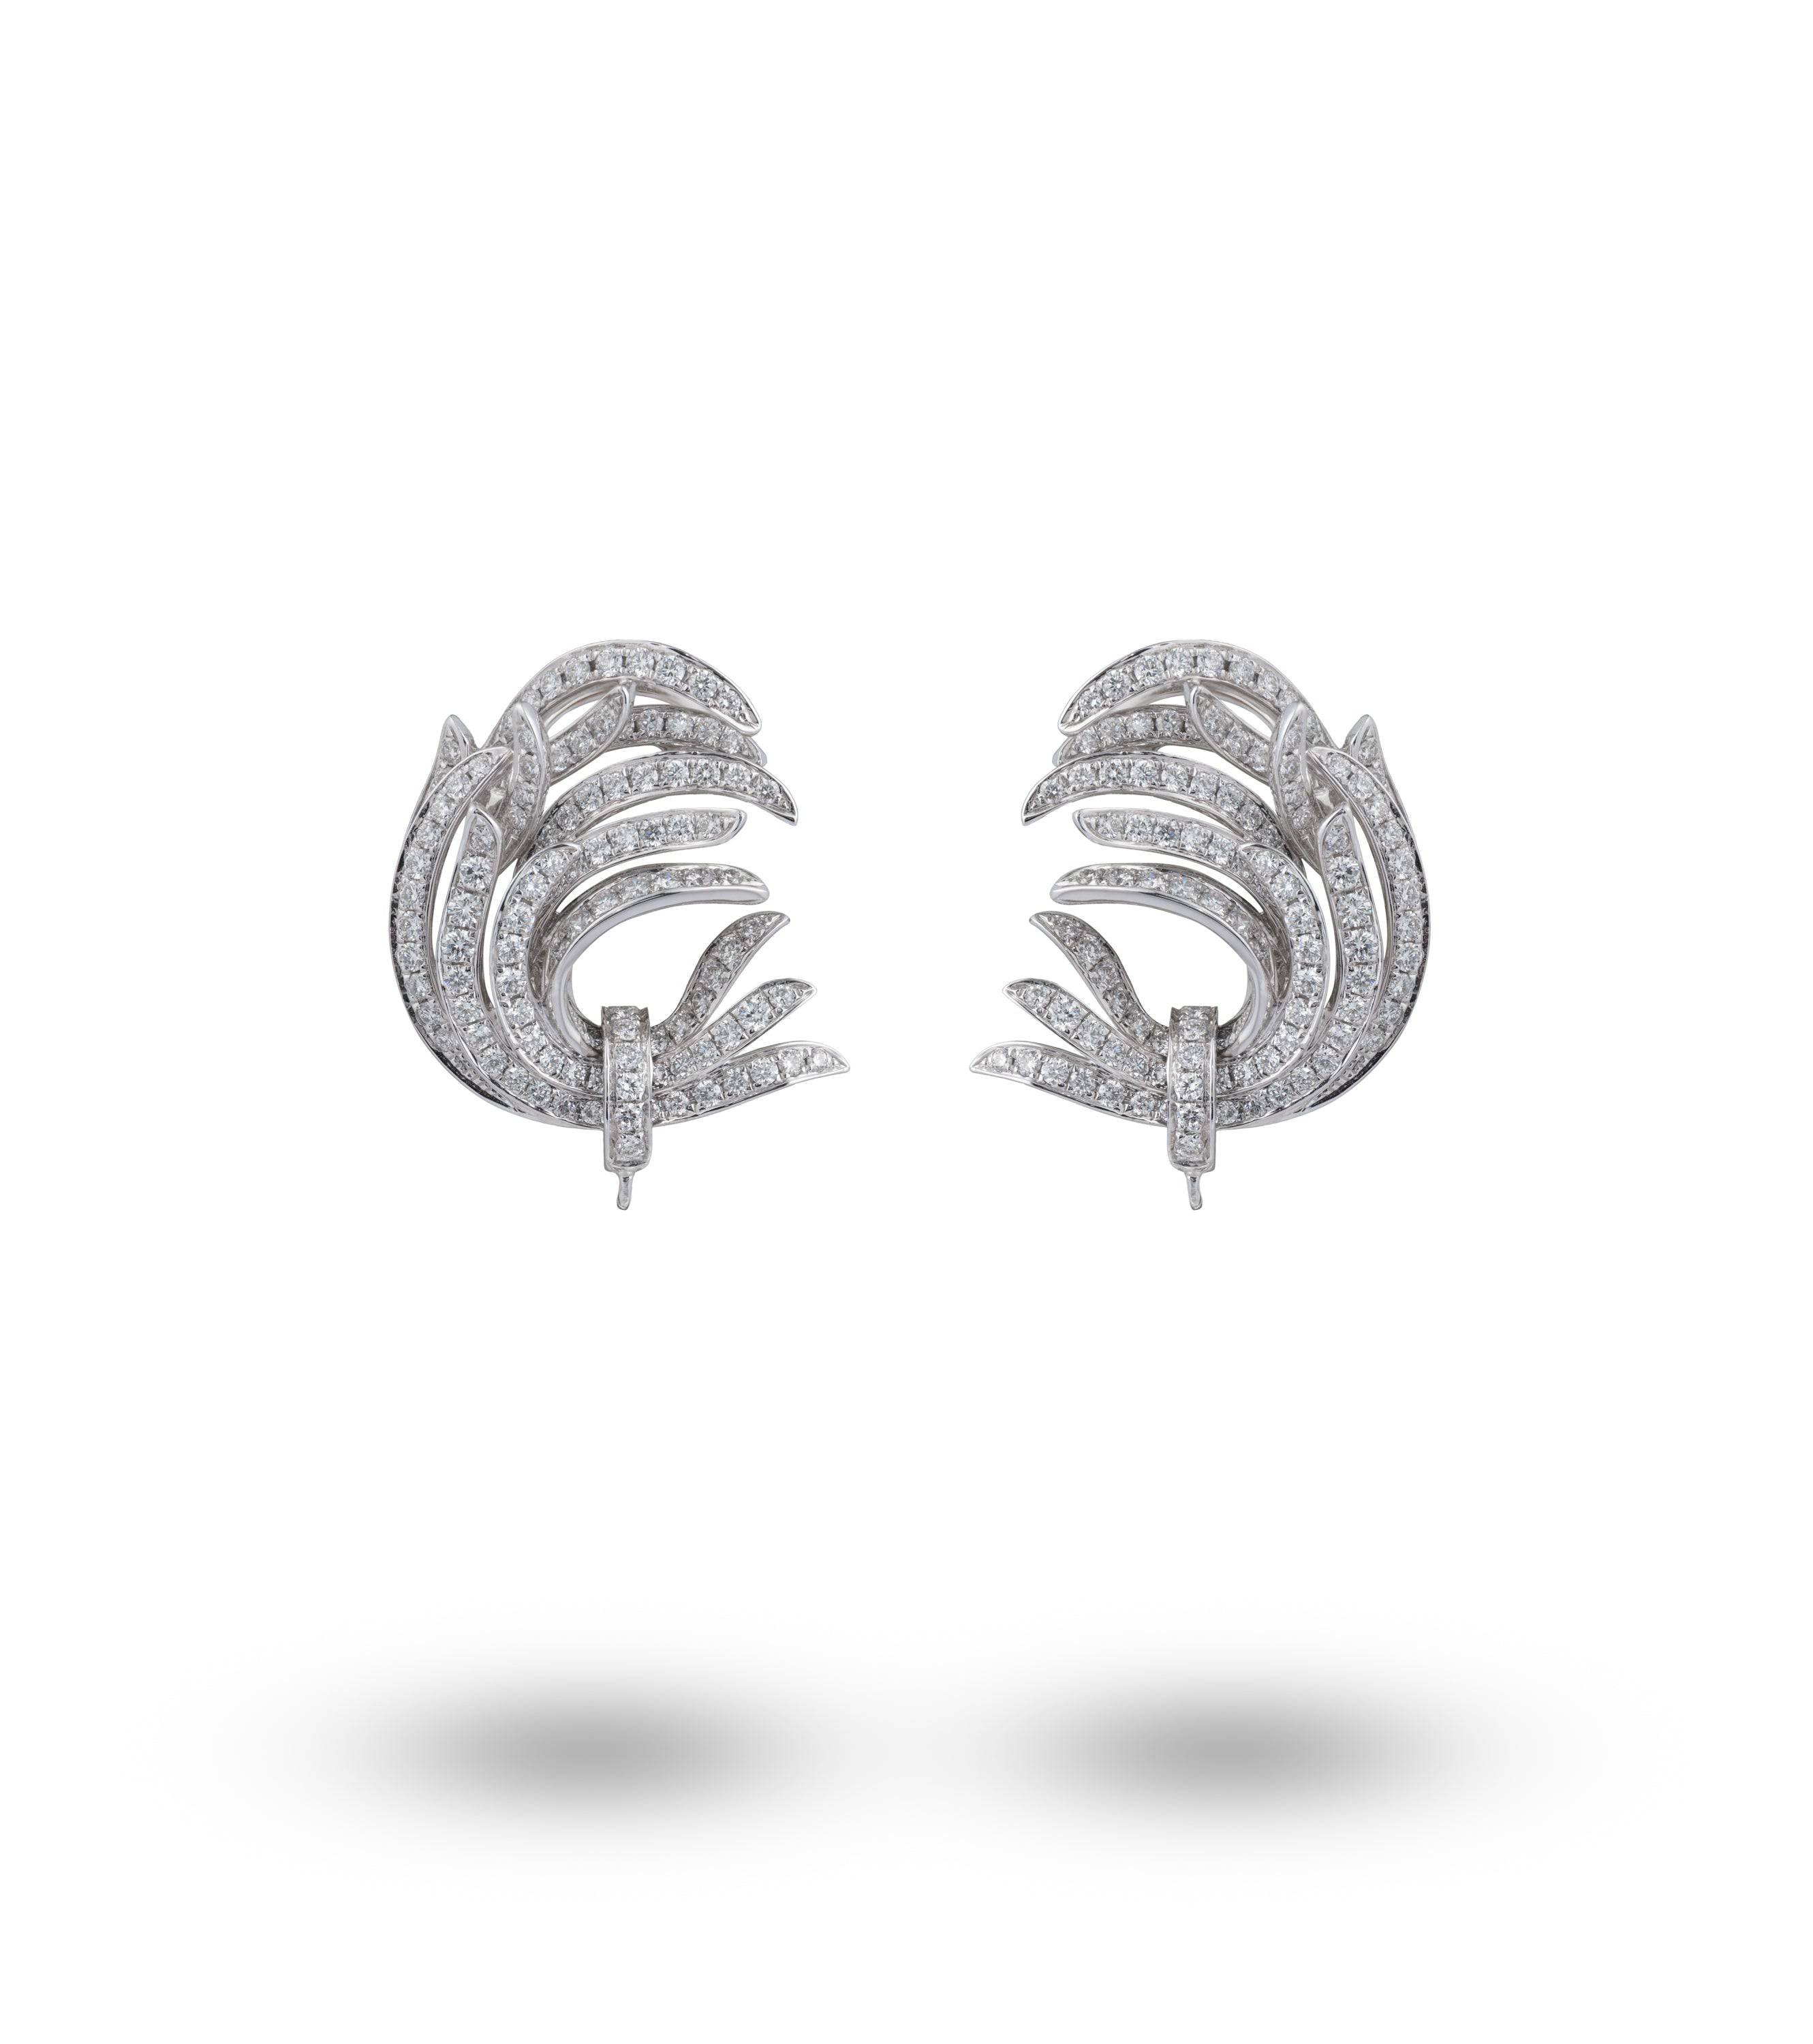 transformational-diamond-south-sea-pearl-earrings-43588413685924.jpg